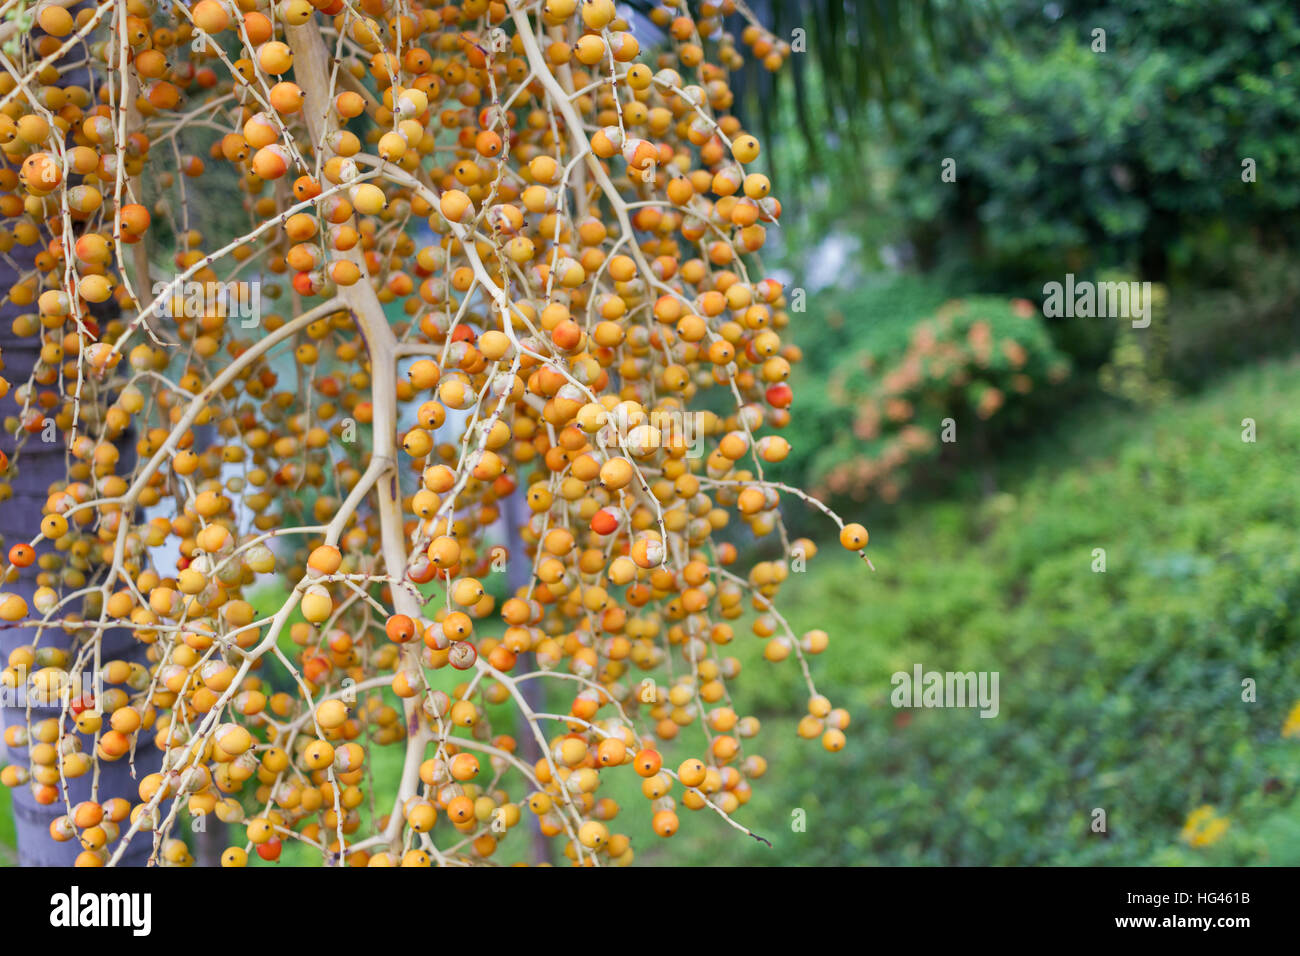 Areca Nut or Betel Nuts from Areca palm, Medium Shot in the Garden Stock Photo